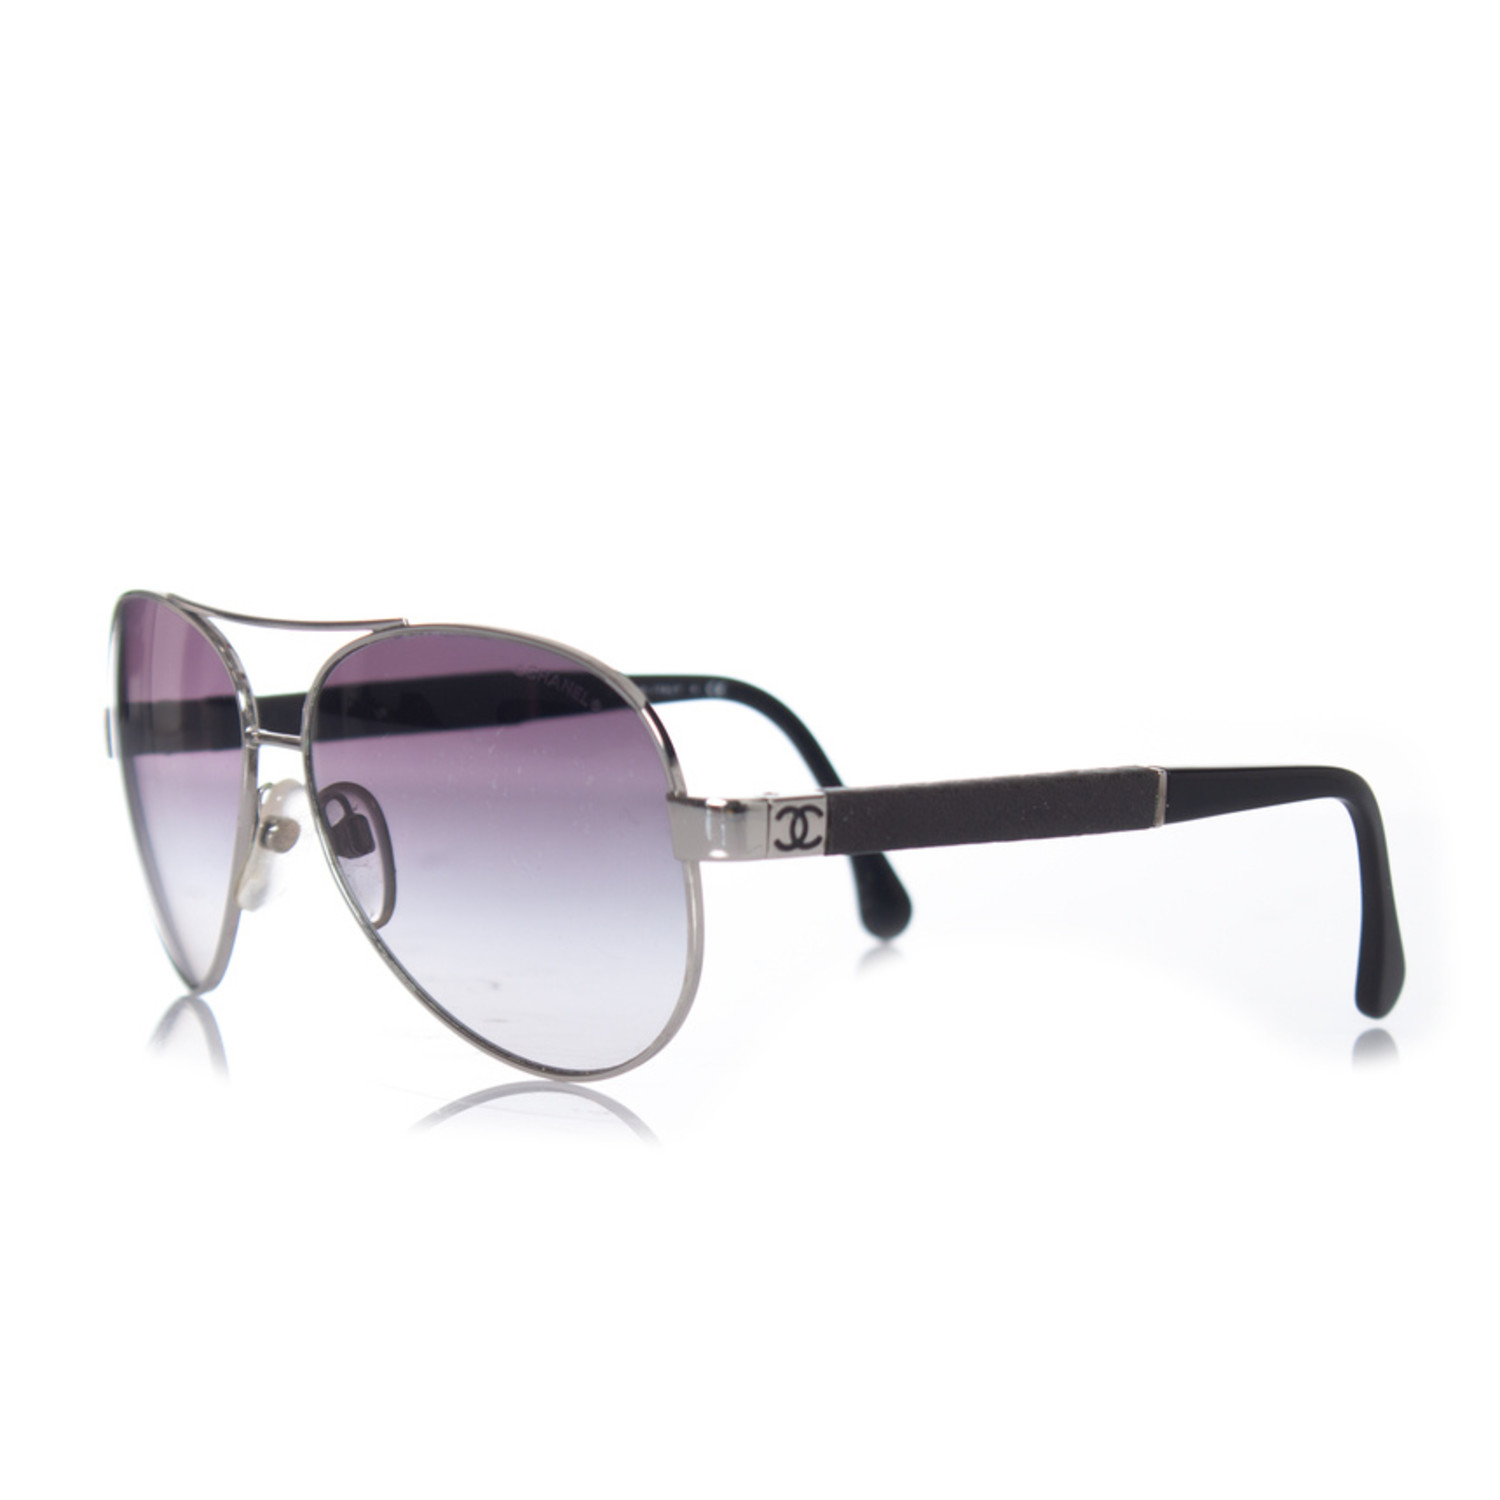 Chanel, Aviator sunglasses in brown - Unique Designer Pieces